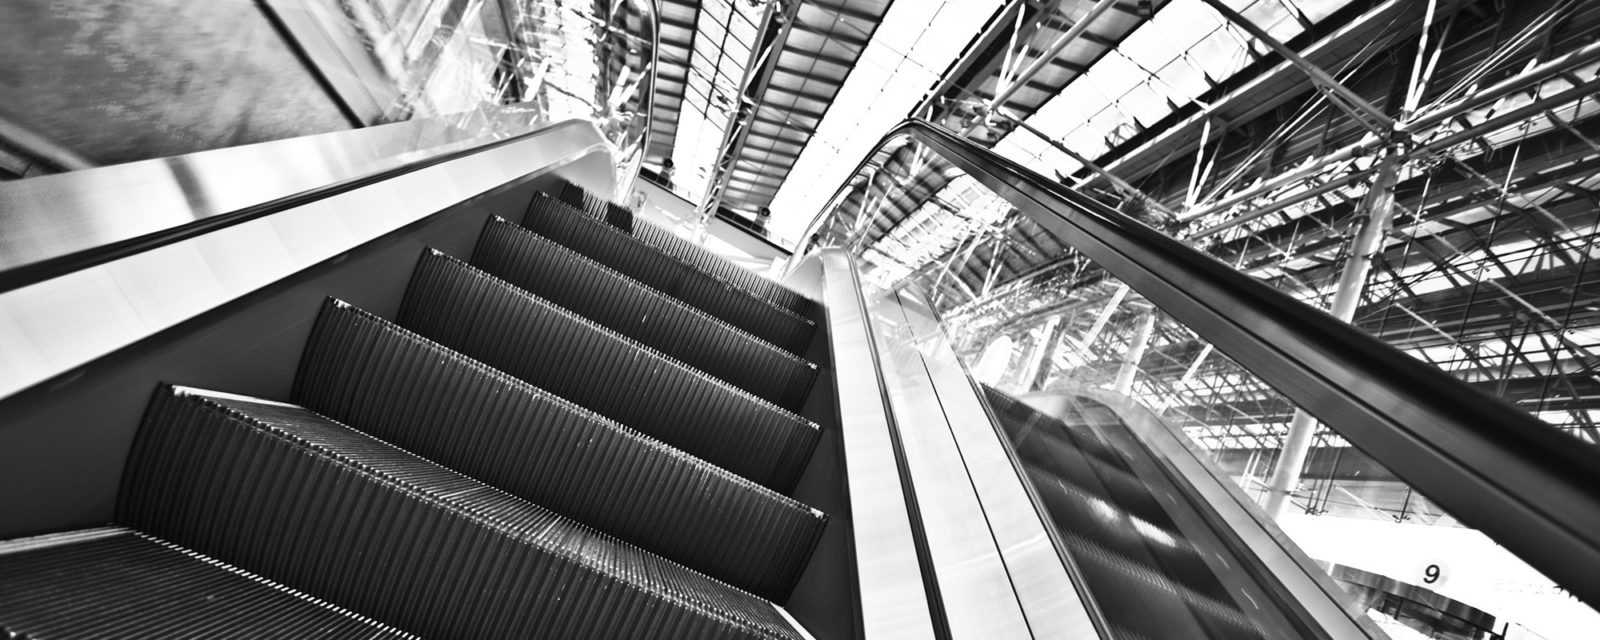 Lift and escalator